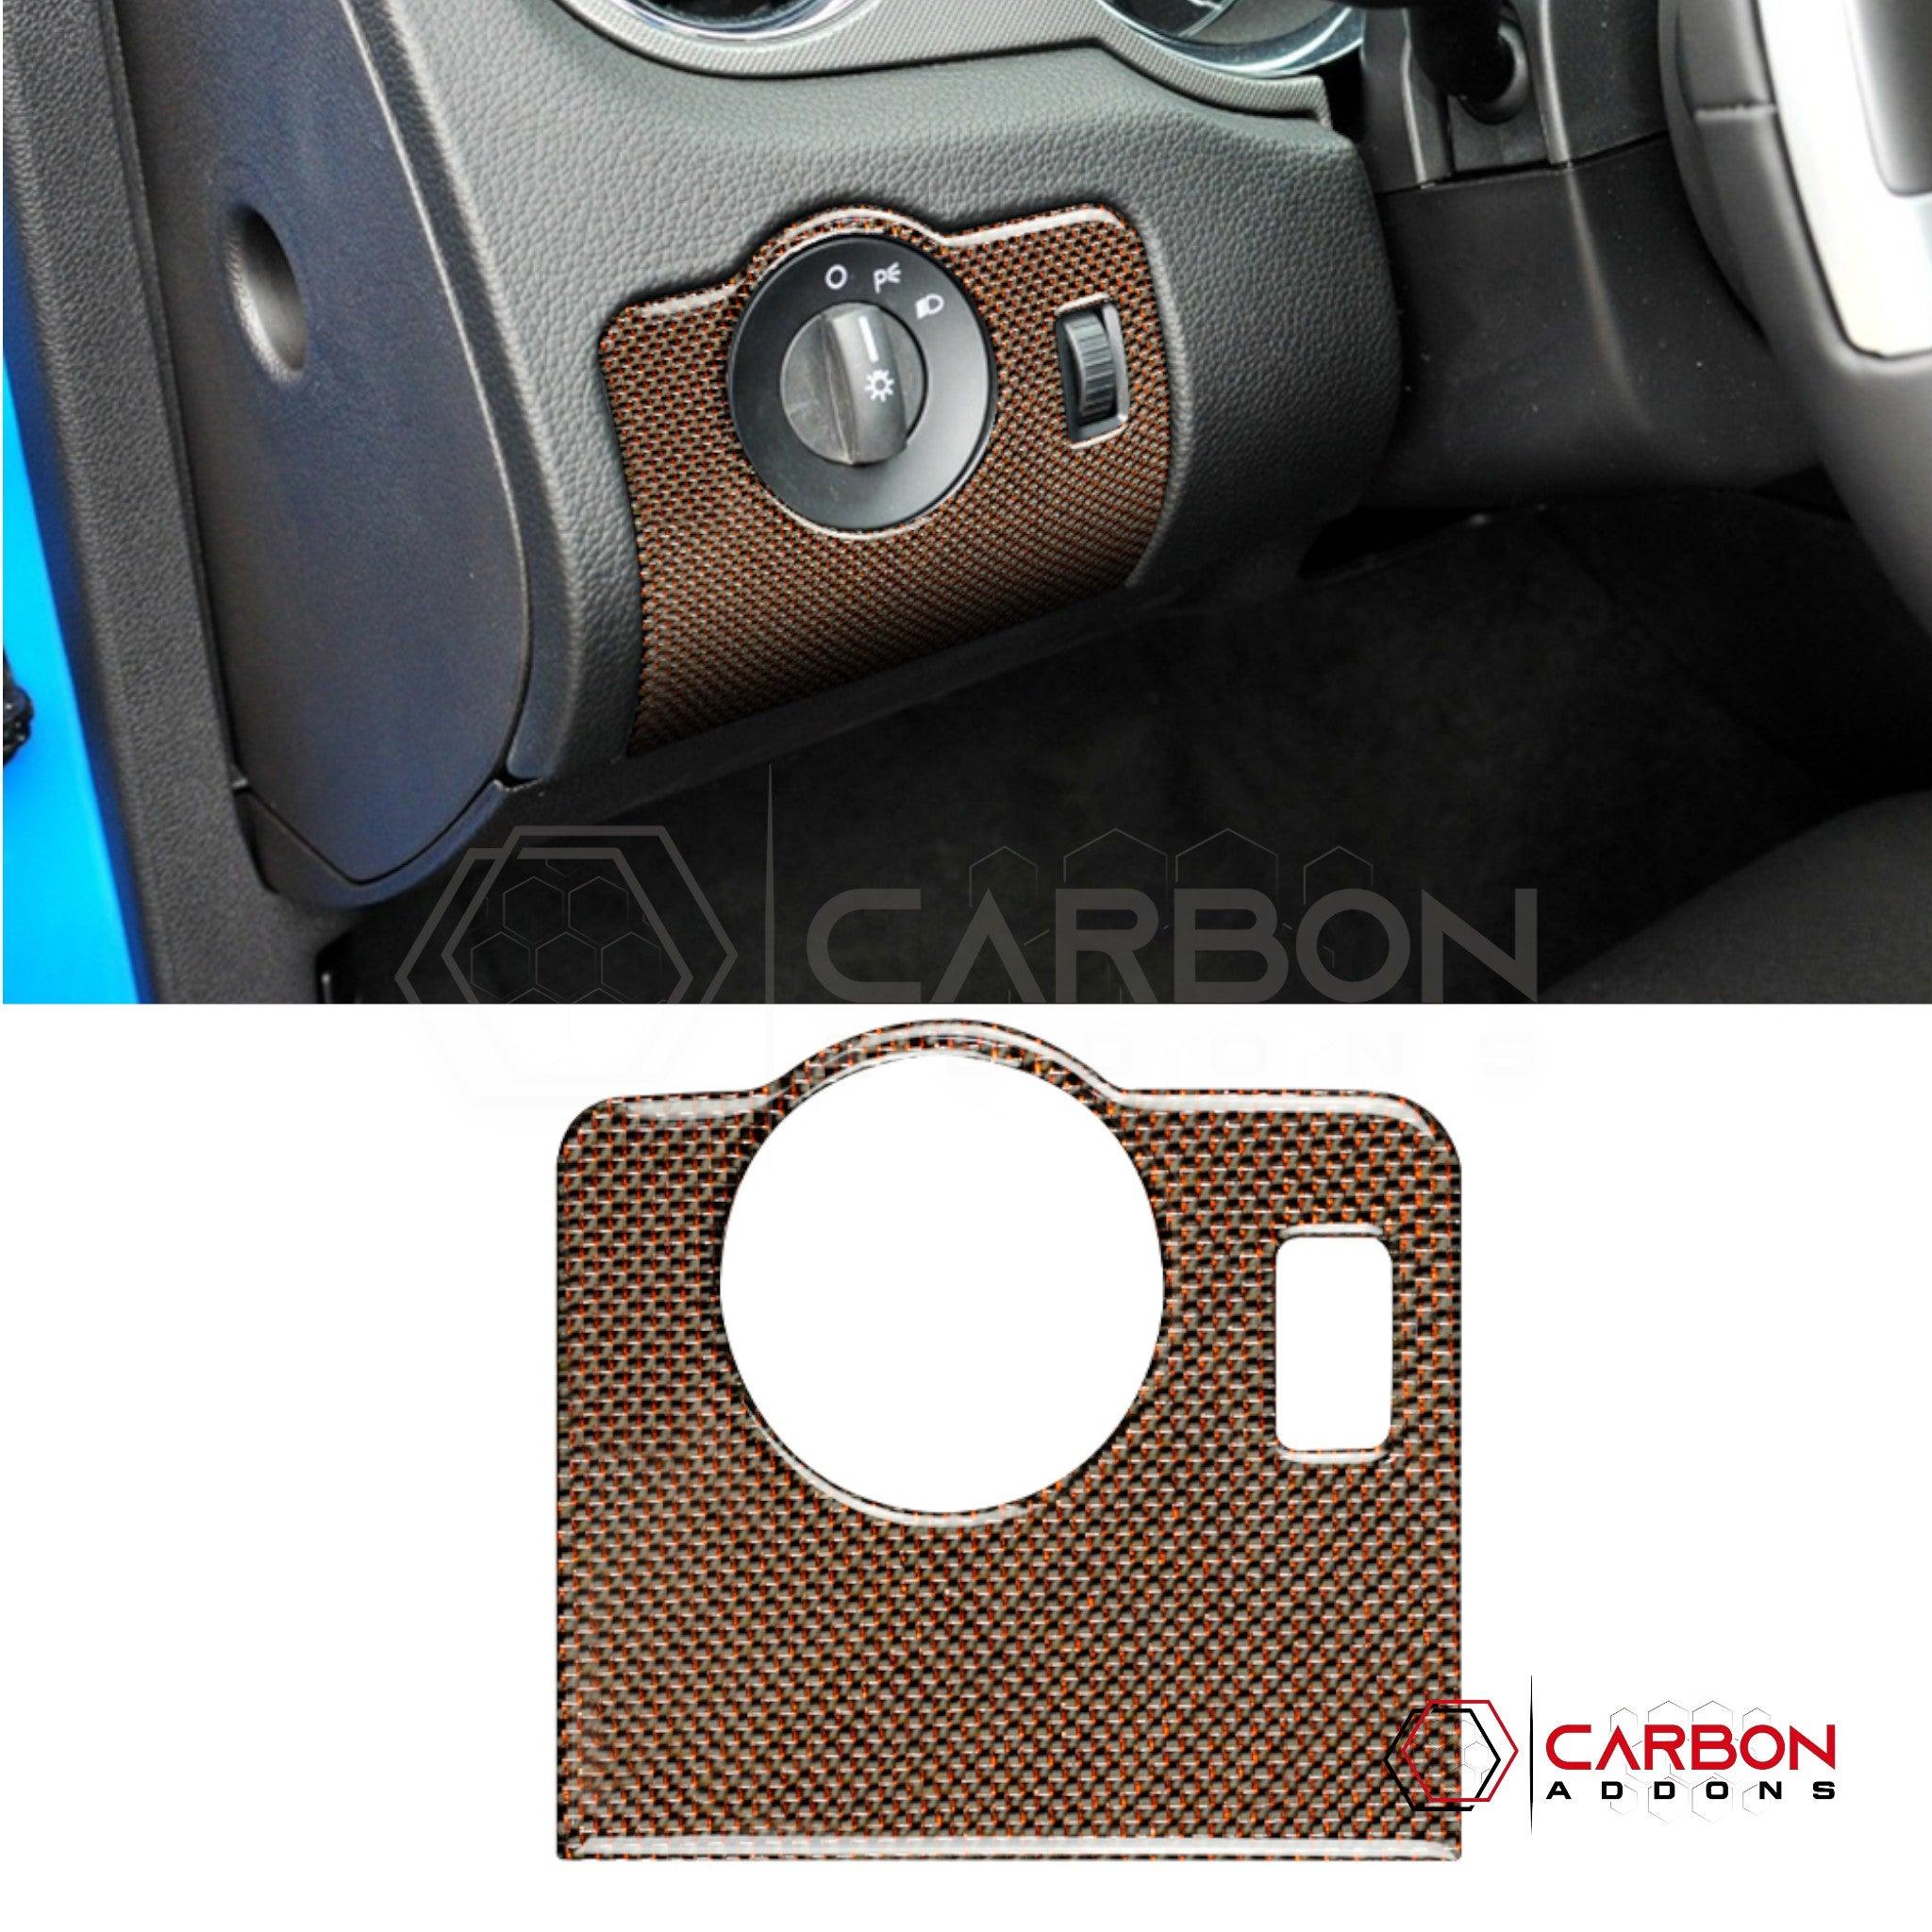 Mustang 2010-2014 Reflective Carbon Fiber Headlight Control Trim Overlay - carbonaddons Carbon Fiber Parts, Accessories, Upgrades, Mods